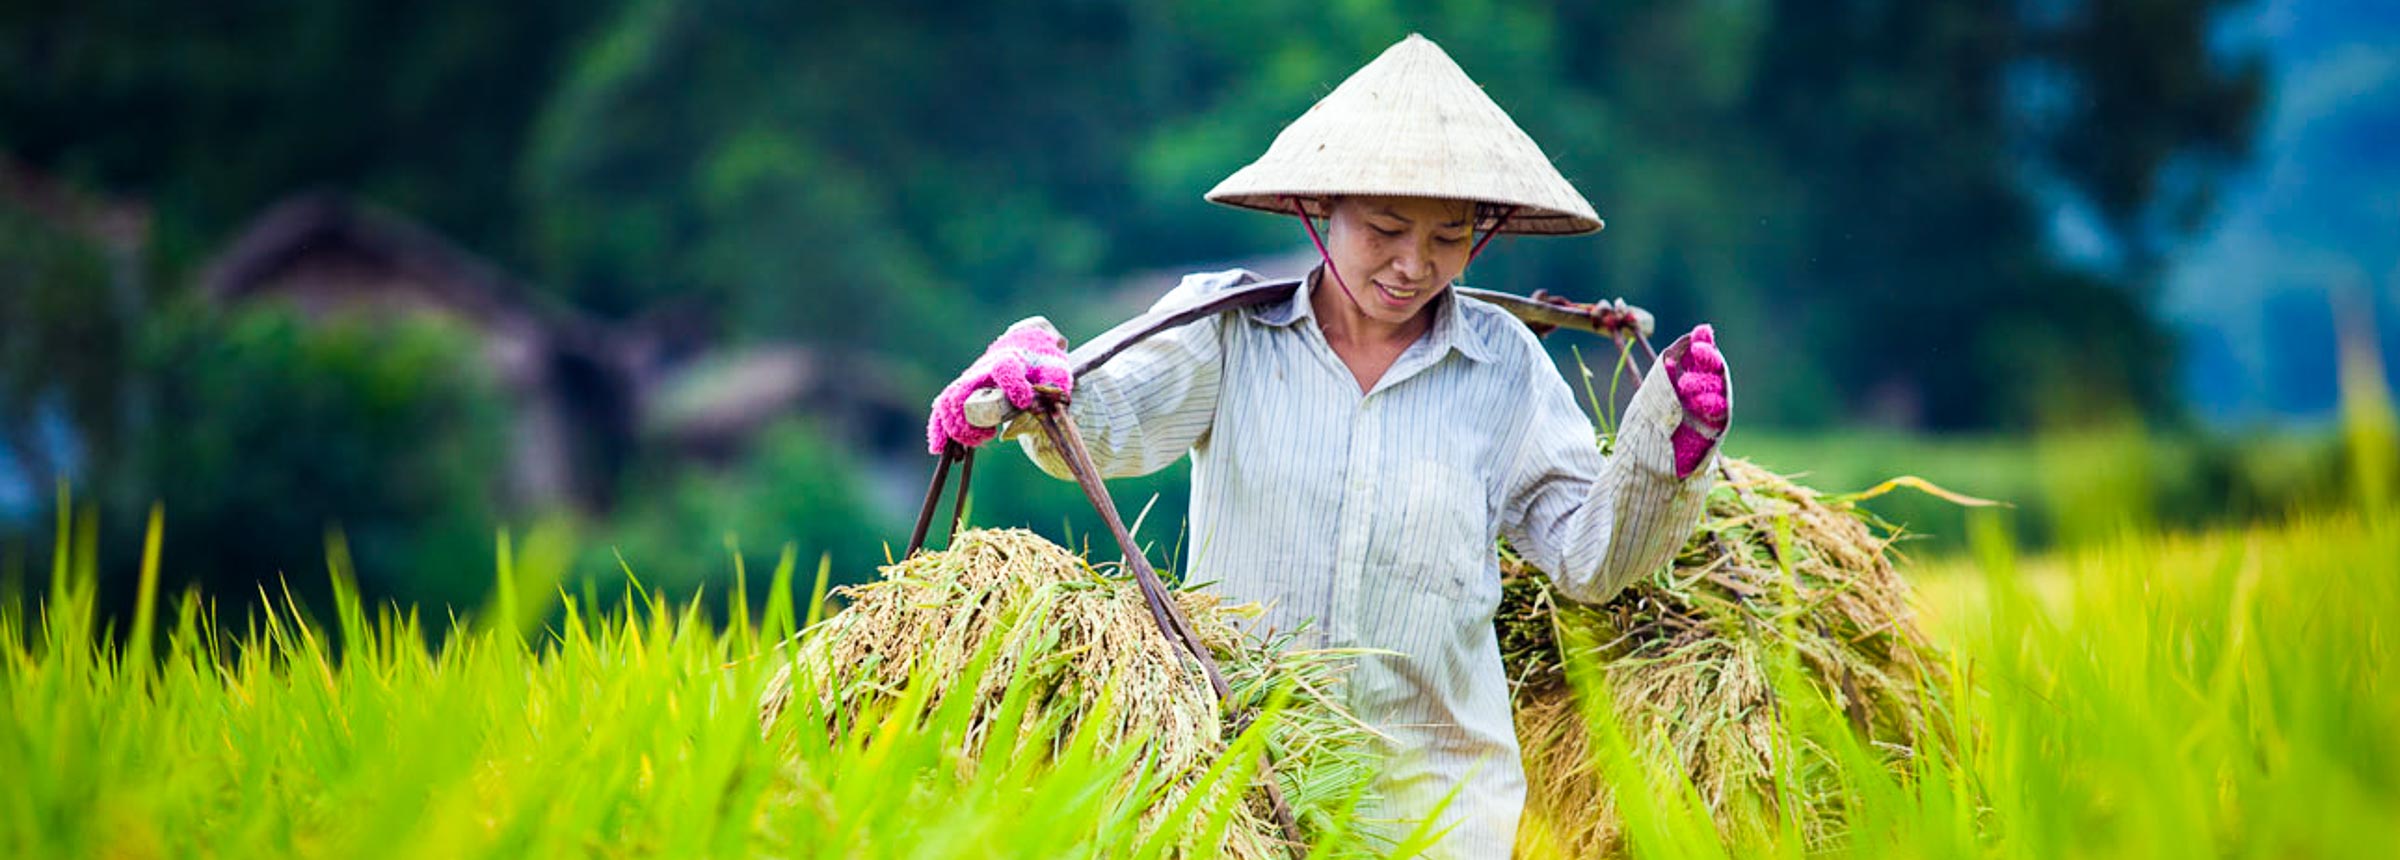 Vietnamese farmer